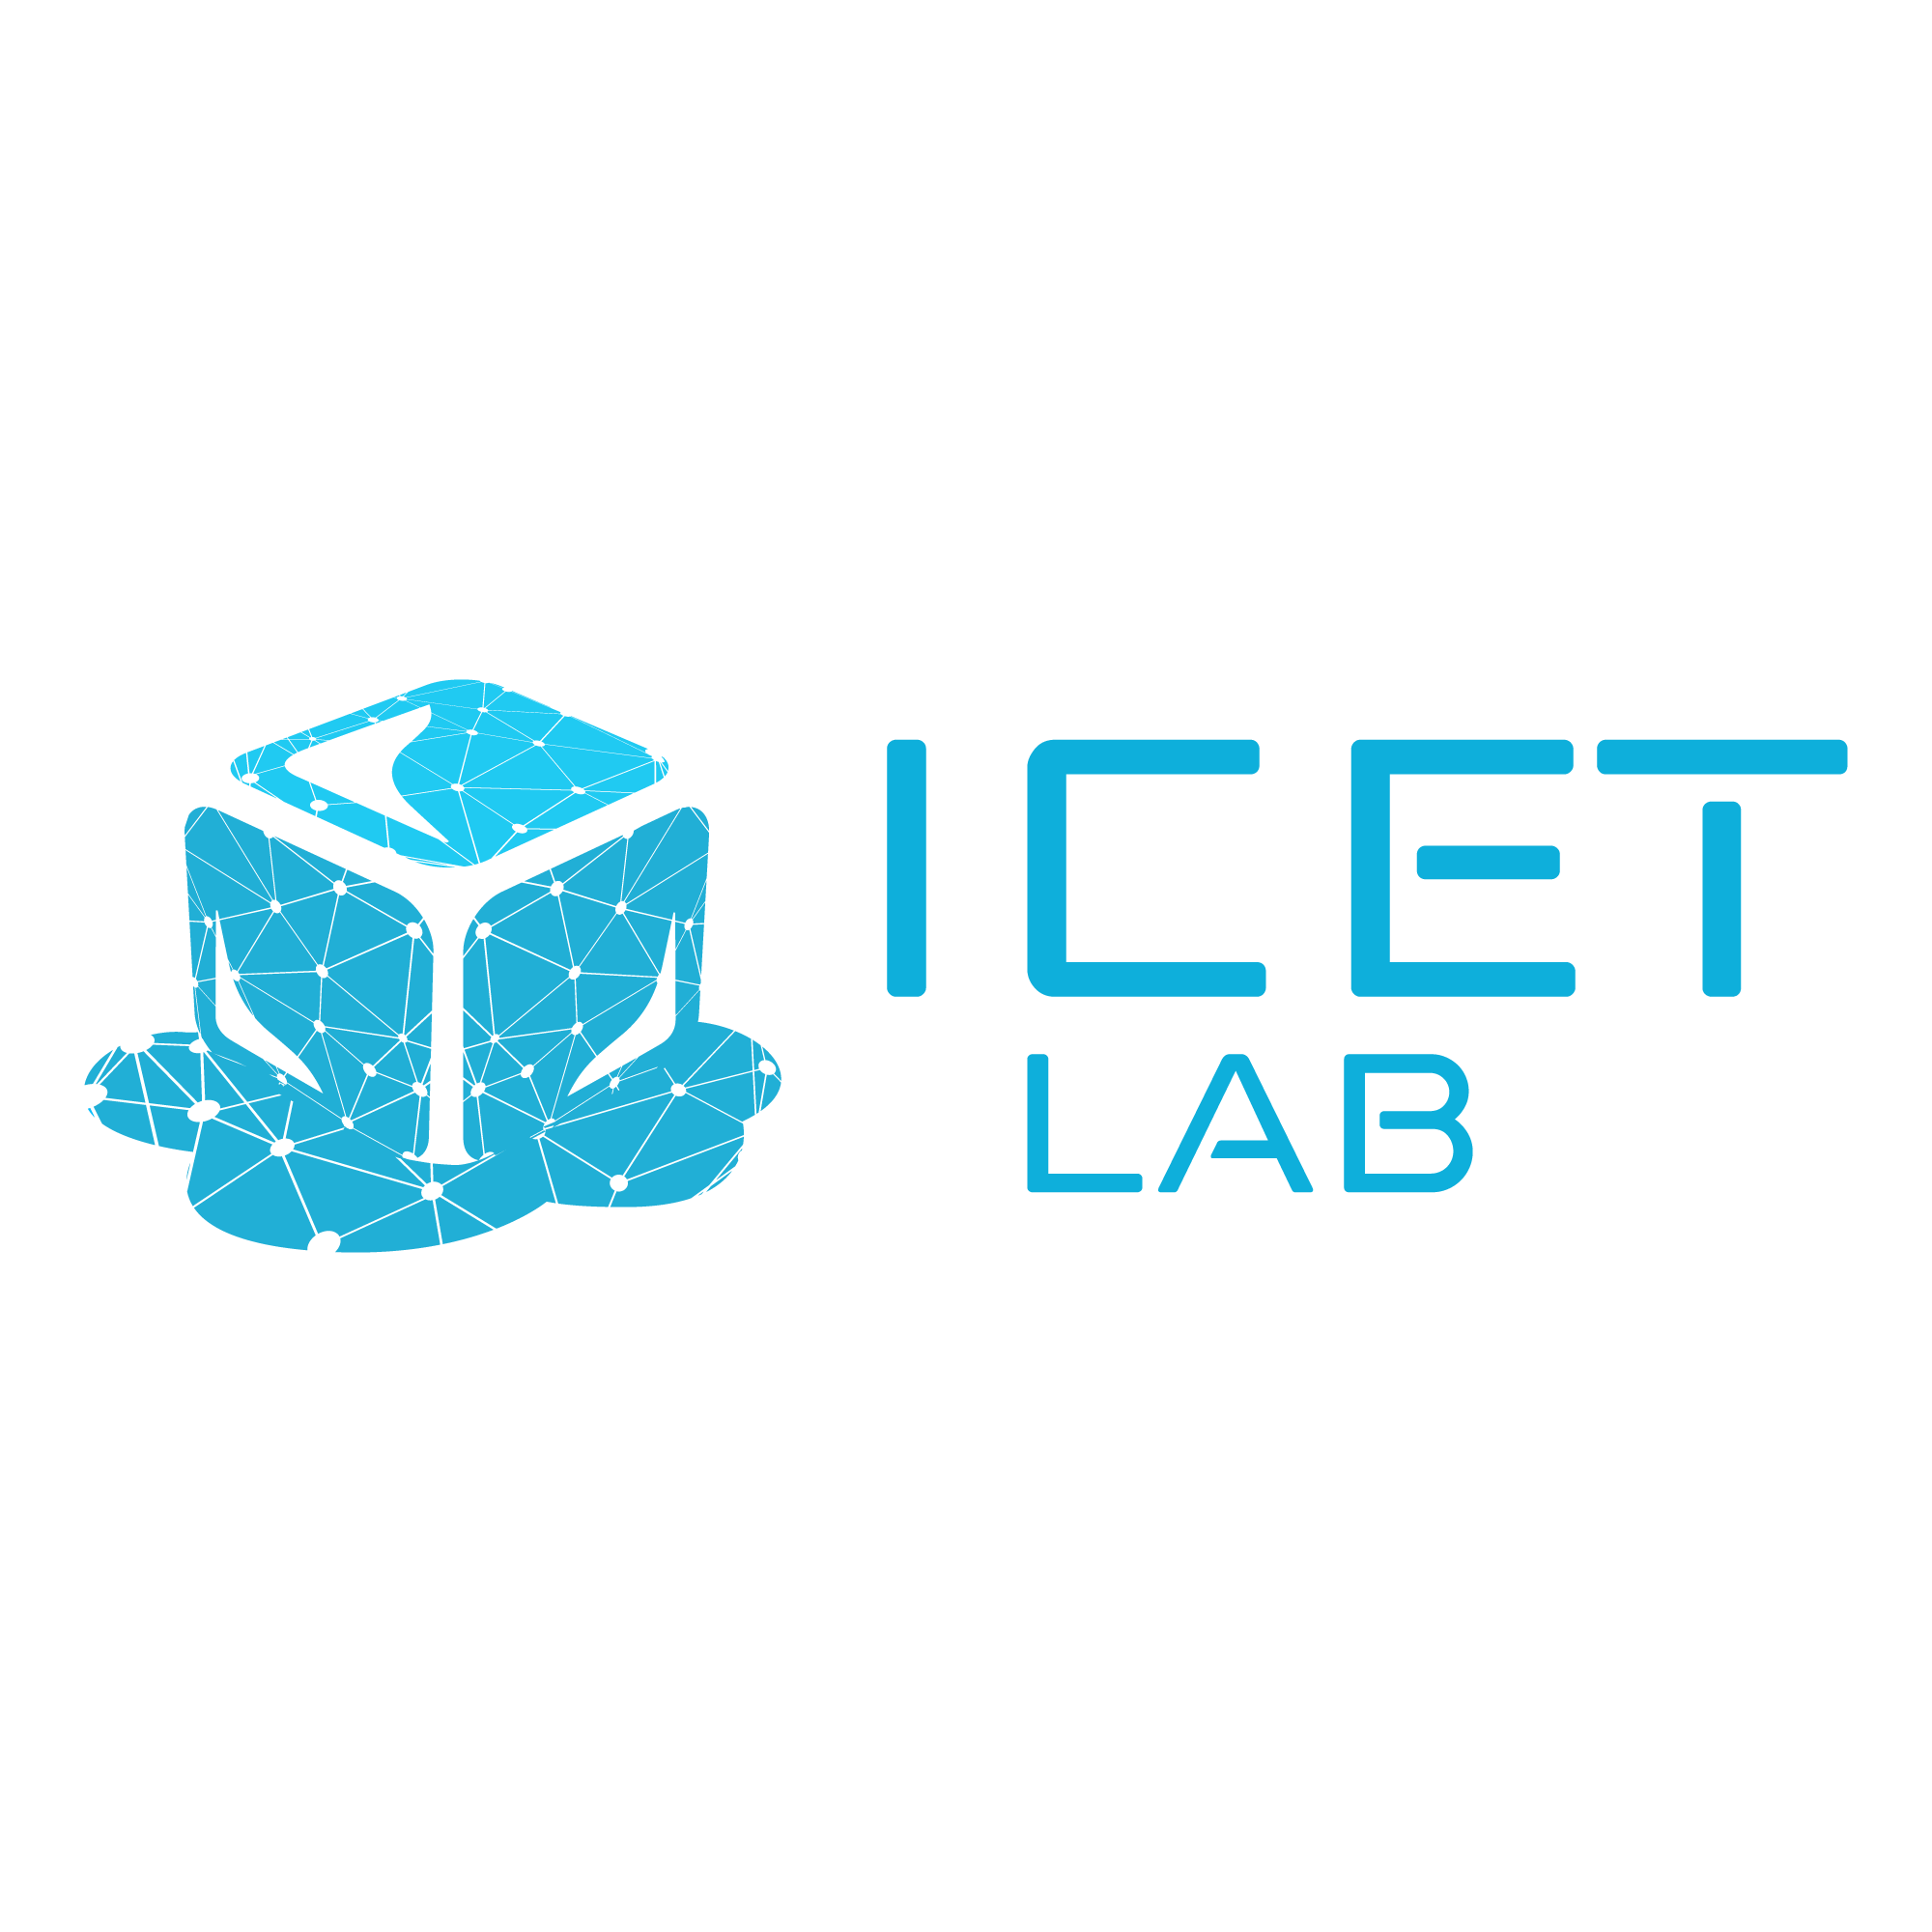 ICET-lab logo